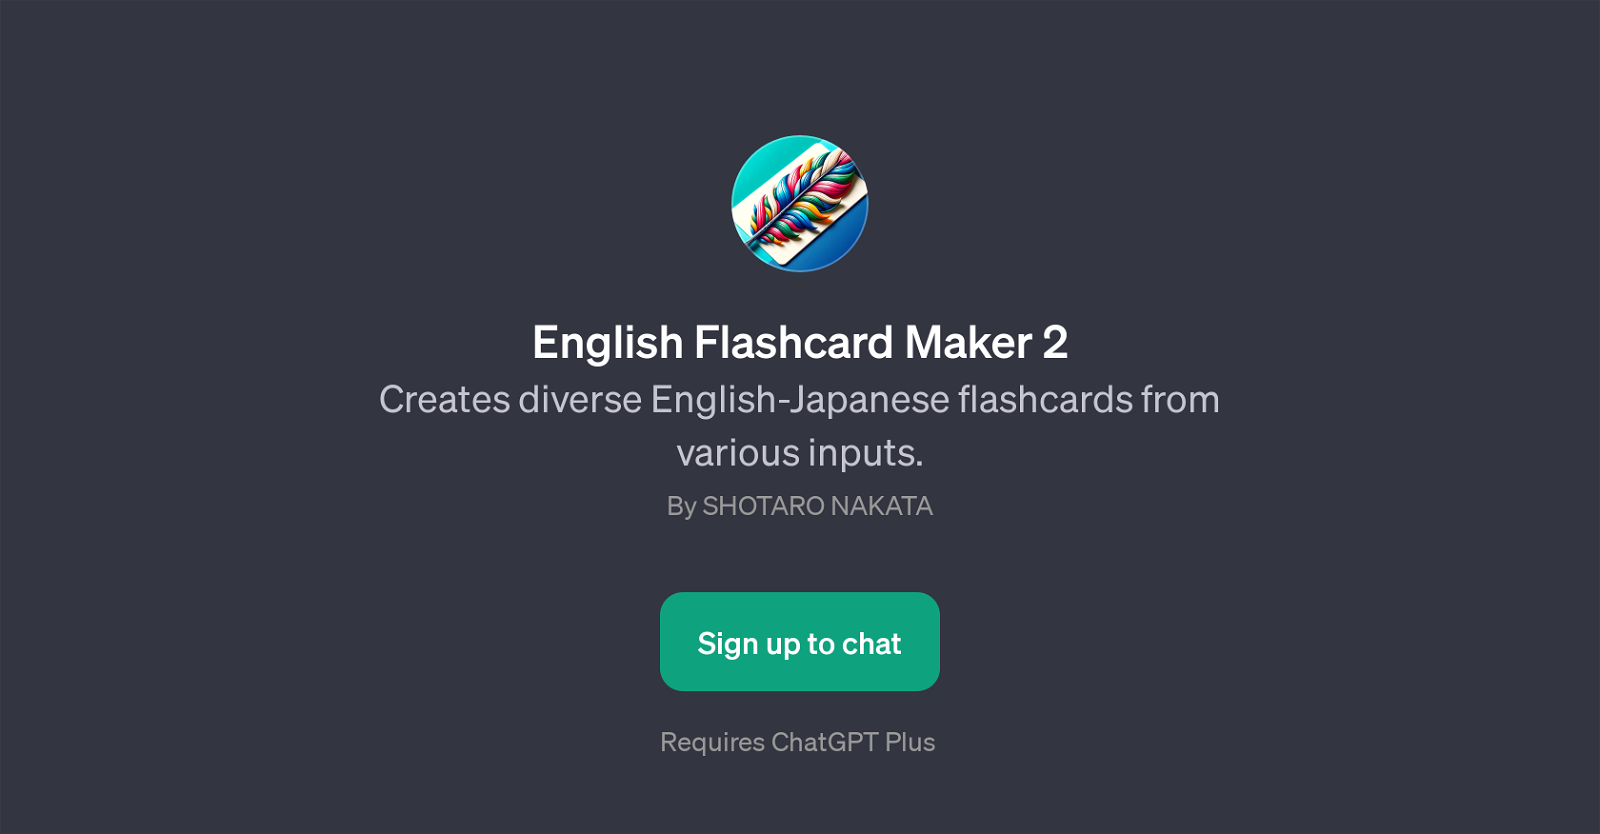 English Flashcard Maker 2 website